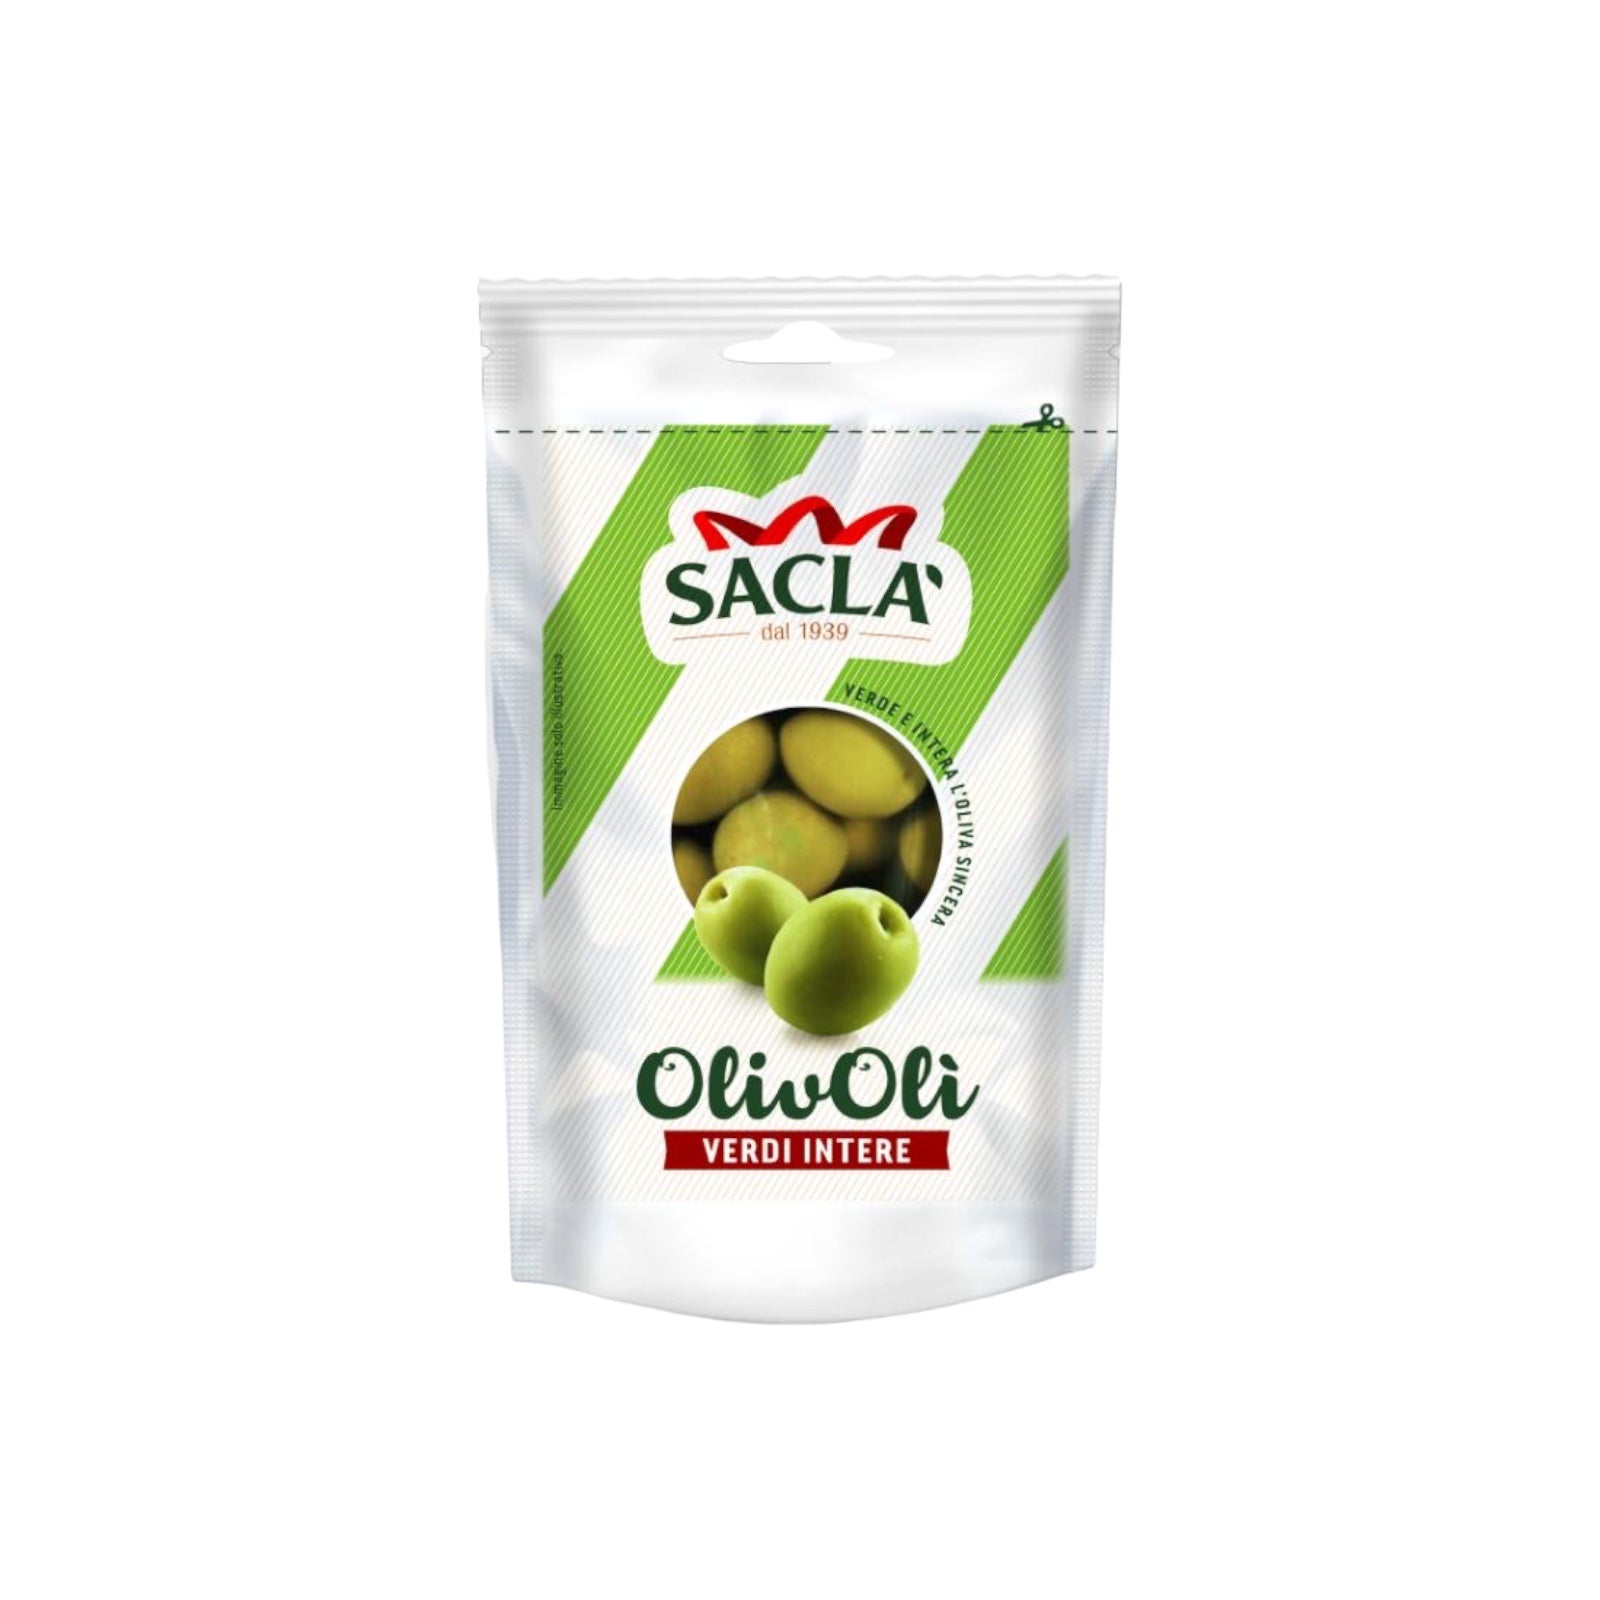 Saclà OlivOli Olive Verdi- Whole Green Olives 185g (85g Drained)